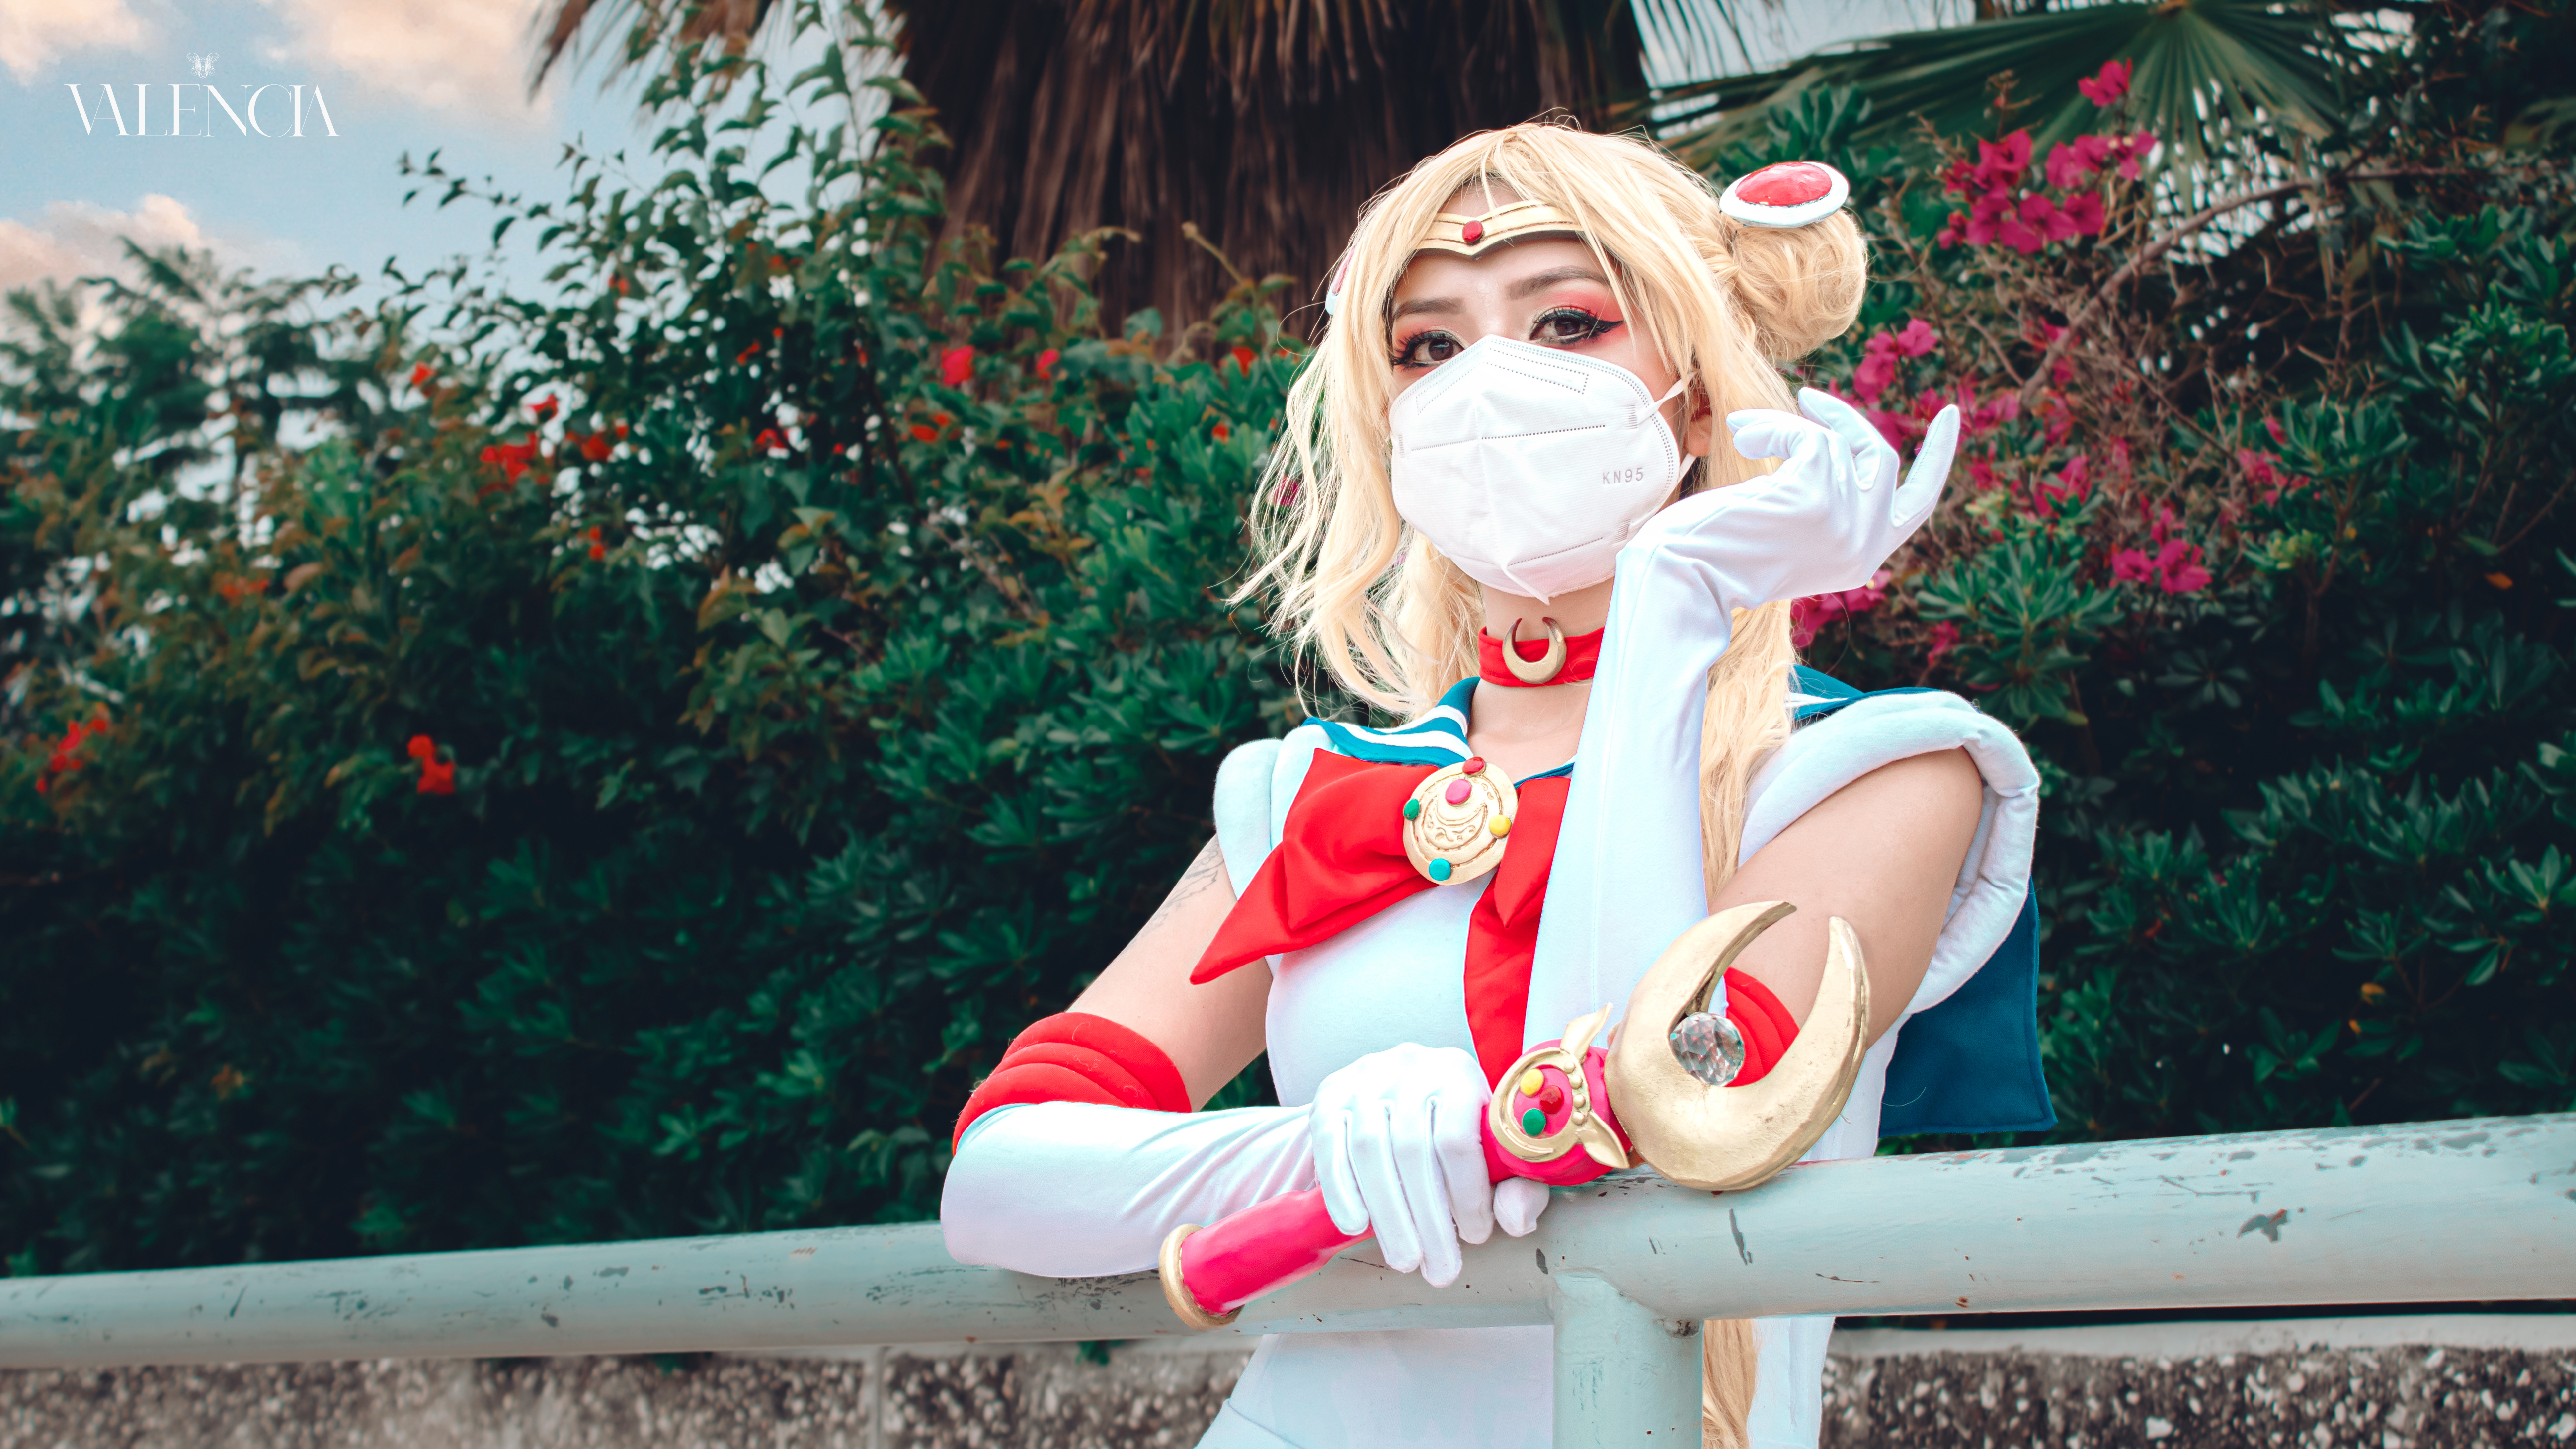 People 5184x2916 Sailor Moon Sailor Moon (Character) cosplay women mask blonde